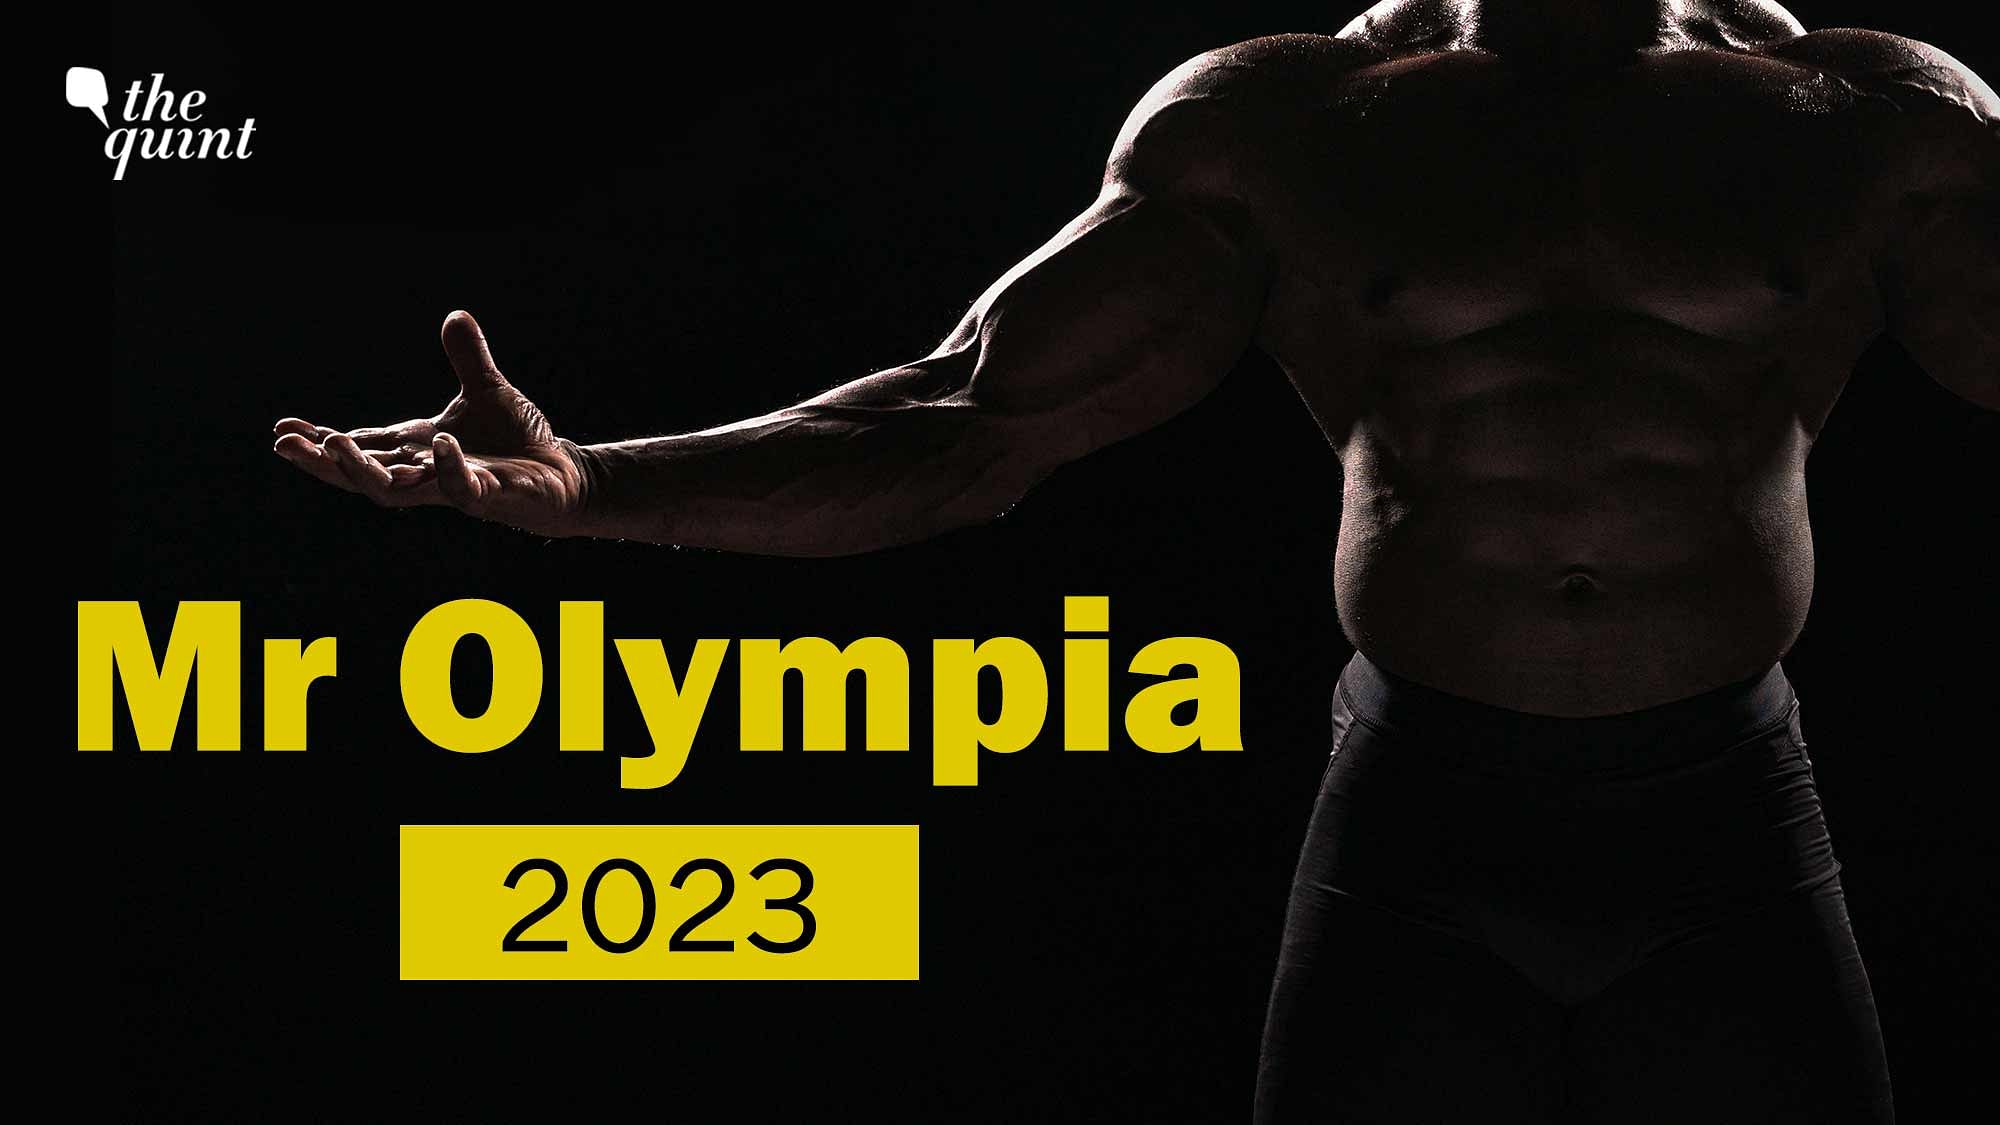 Mr. Olympia Winners: Updated full list of winners until 2023